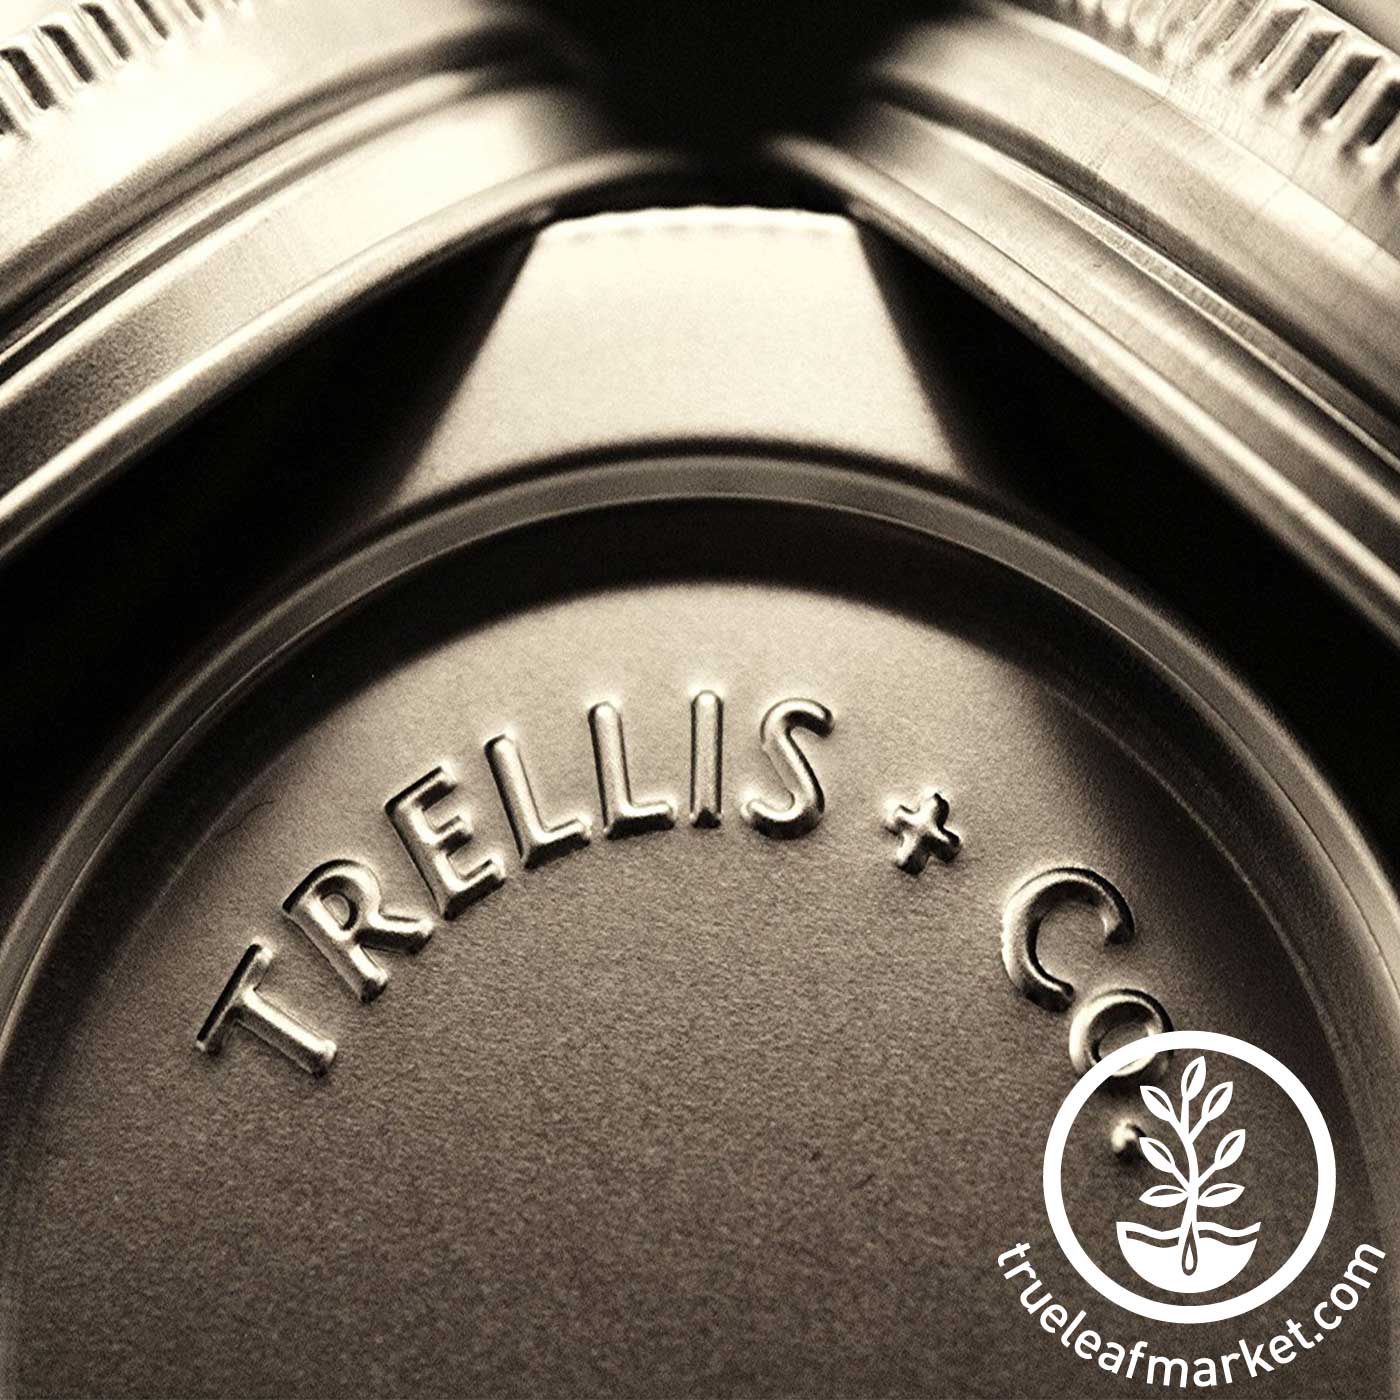 Trellis Stainless steel lids